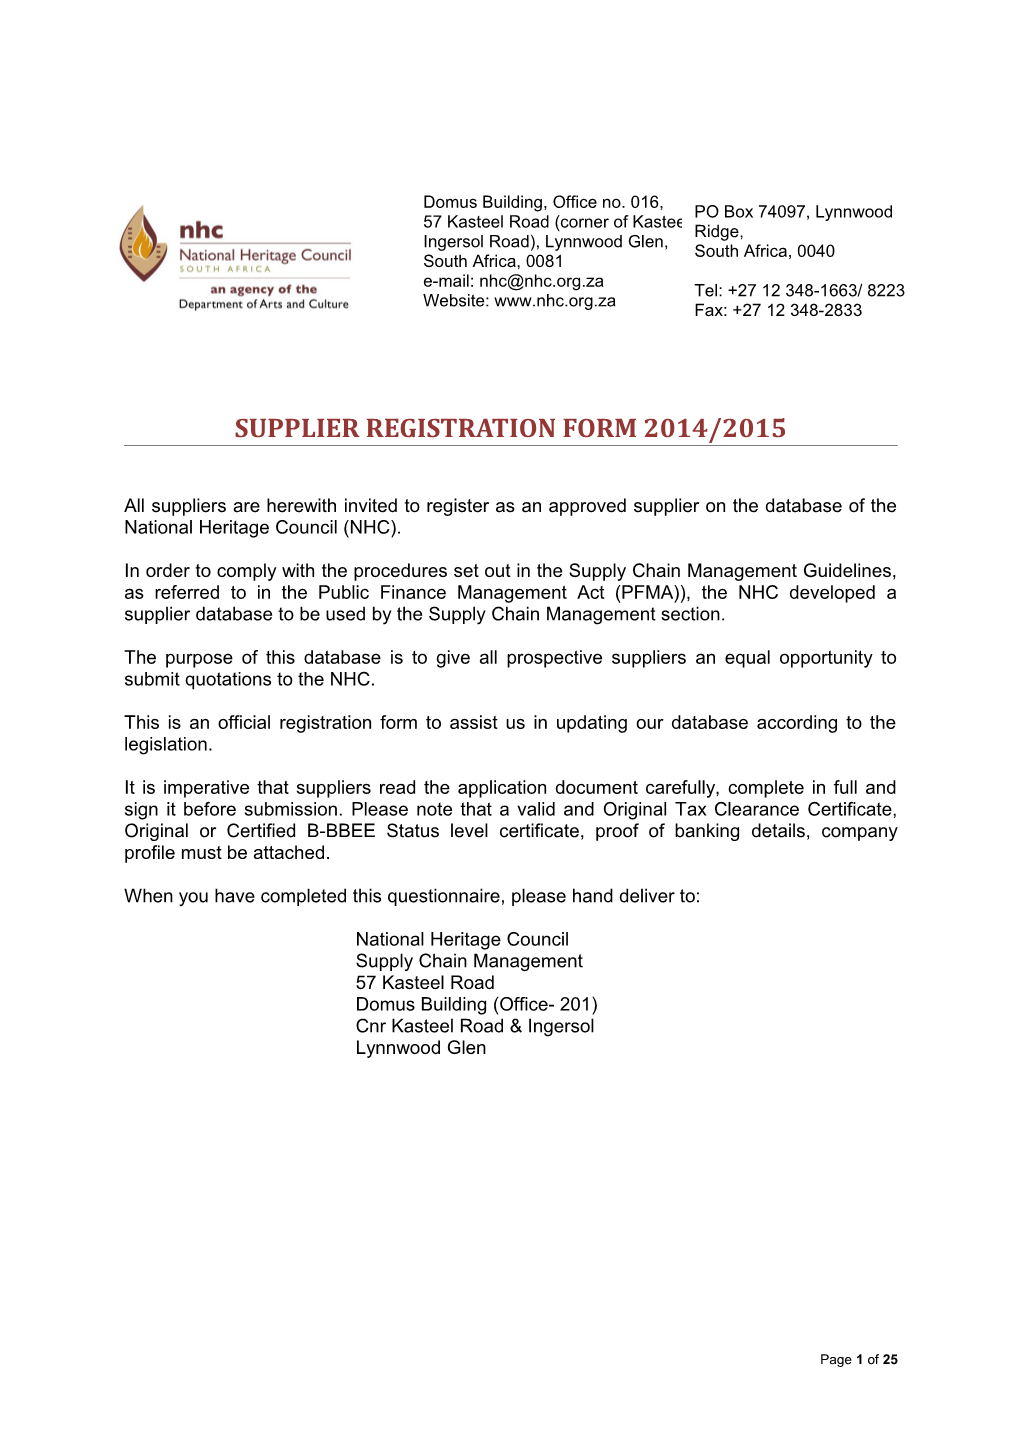 Supplier Registration Form 2014/2015